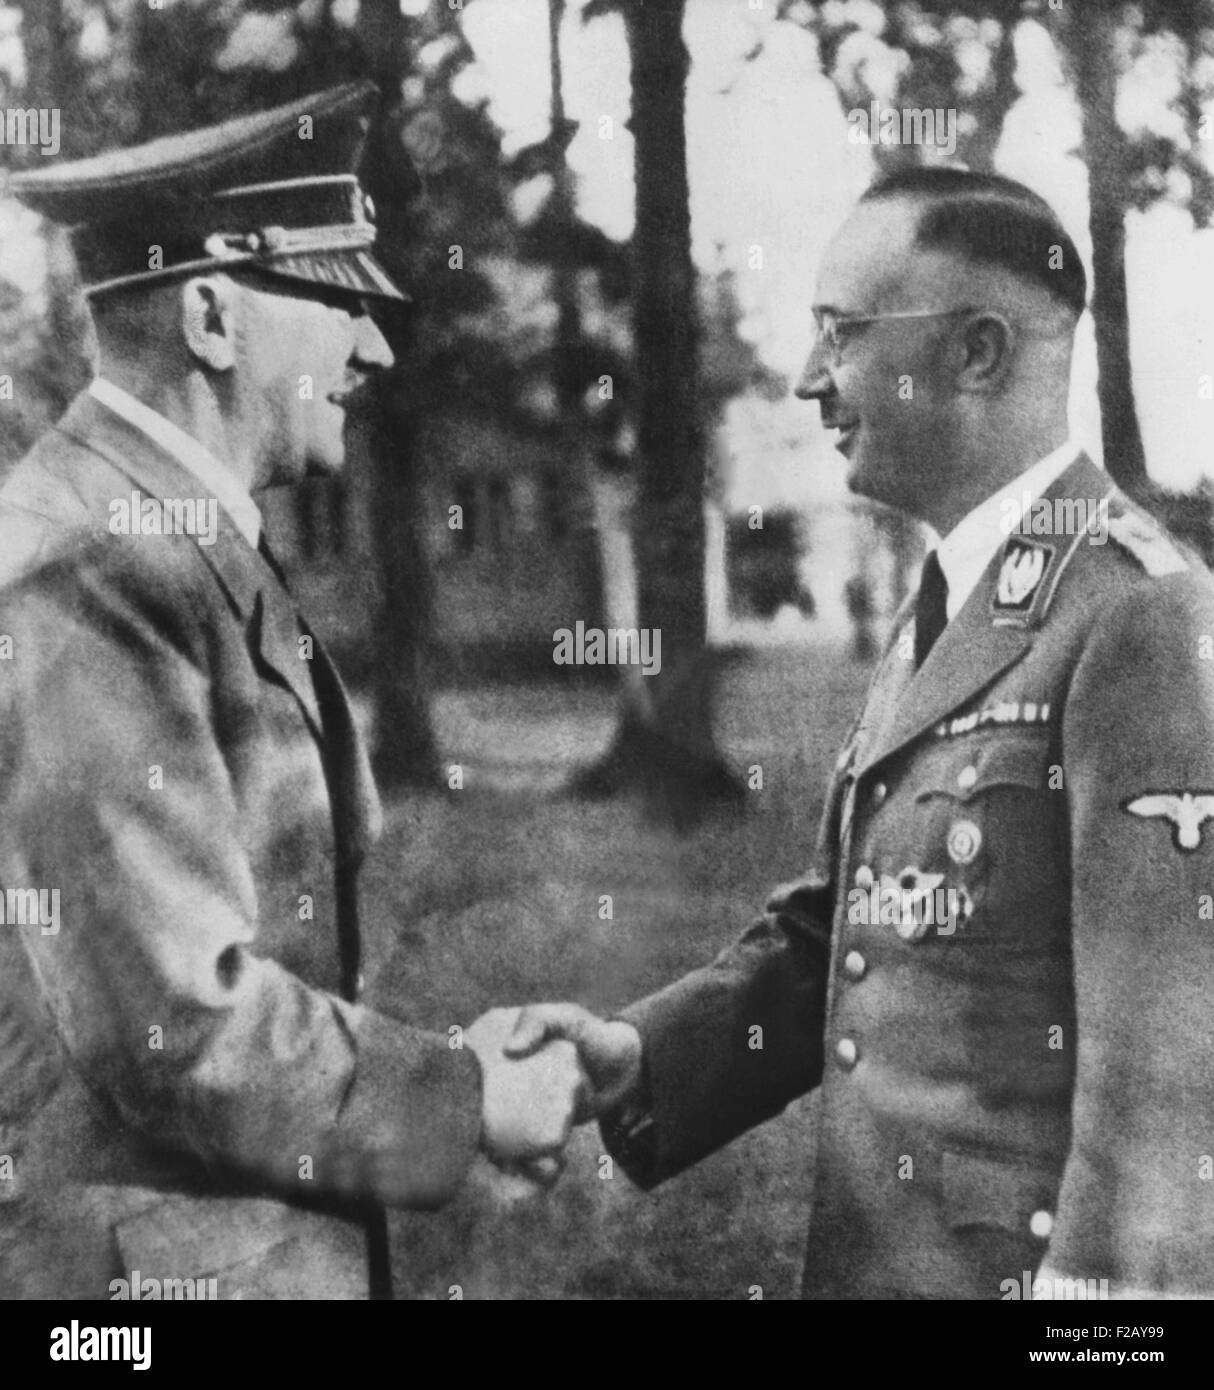 Heinrich Himmler, shaking hands with Adolf Hitler. Ca. 1940. Himmler was leader of the elite Nazi troops, Schutzstaffel or SS. (CSU 2015 9 838) Stock Photo